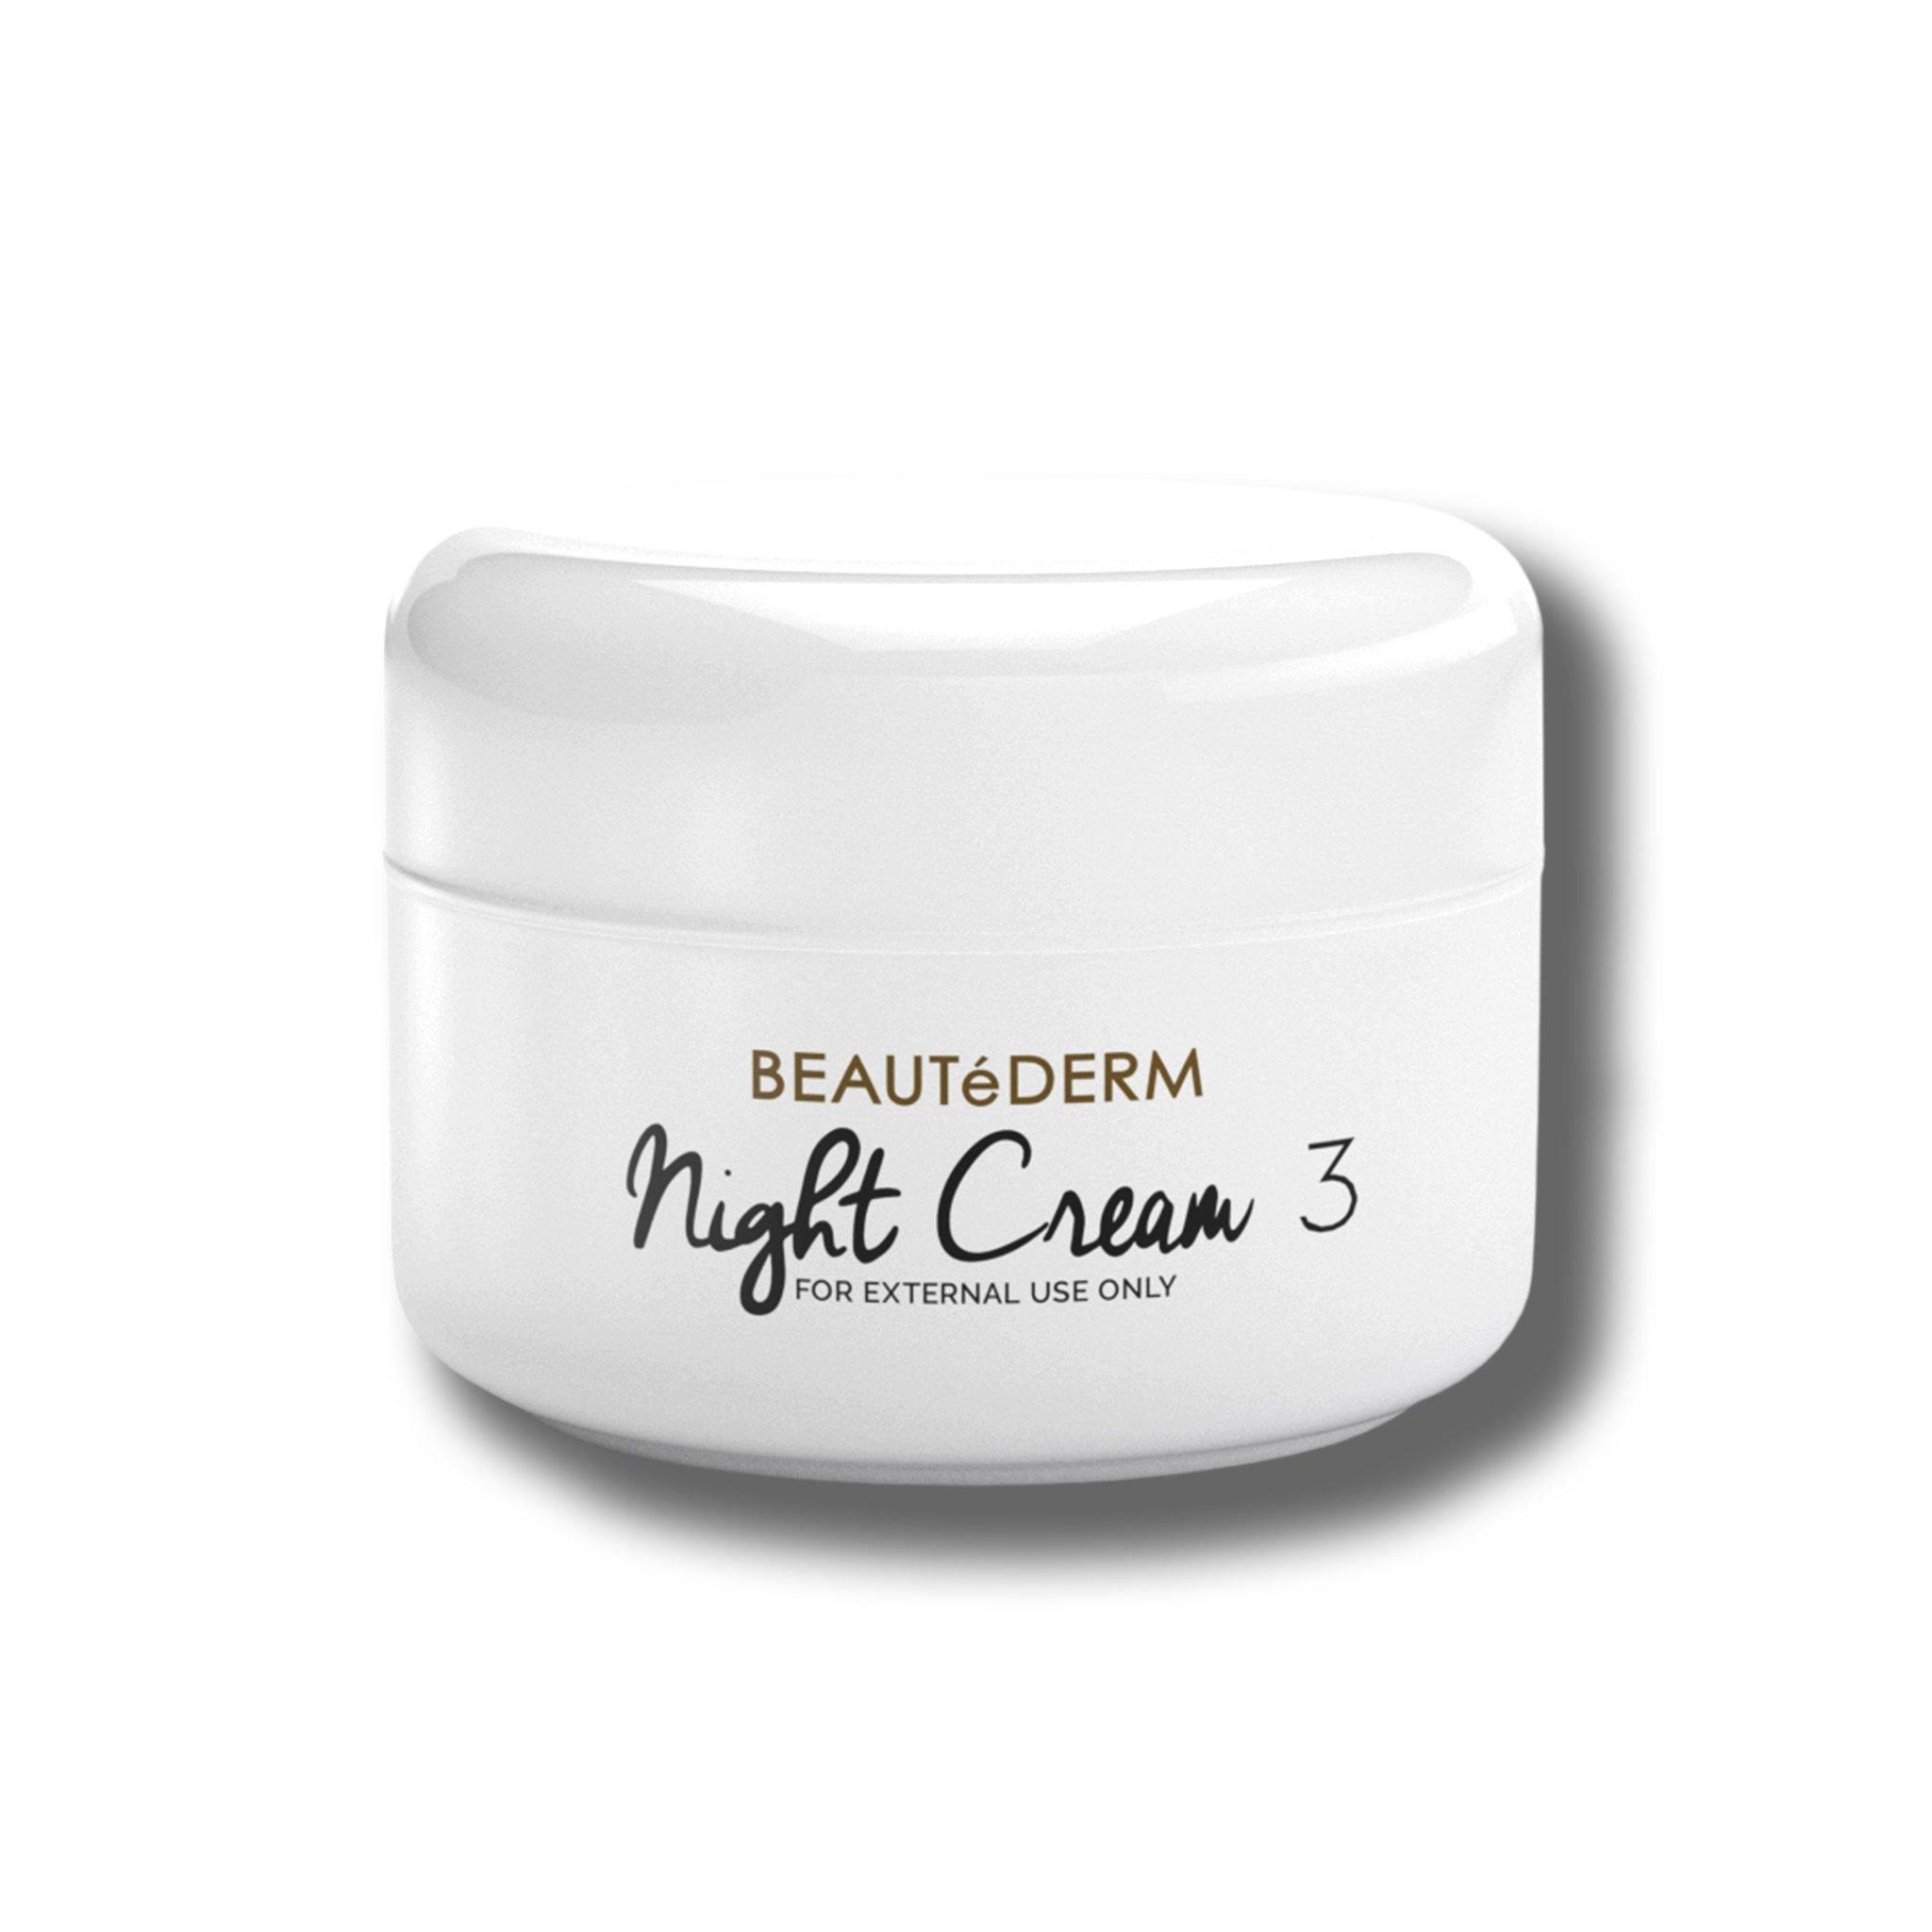 Night Cream 2, Anti-aging, 20g, by Beautederm